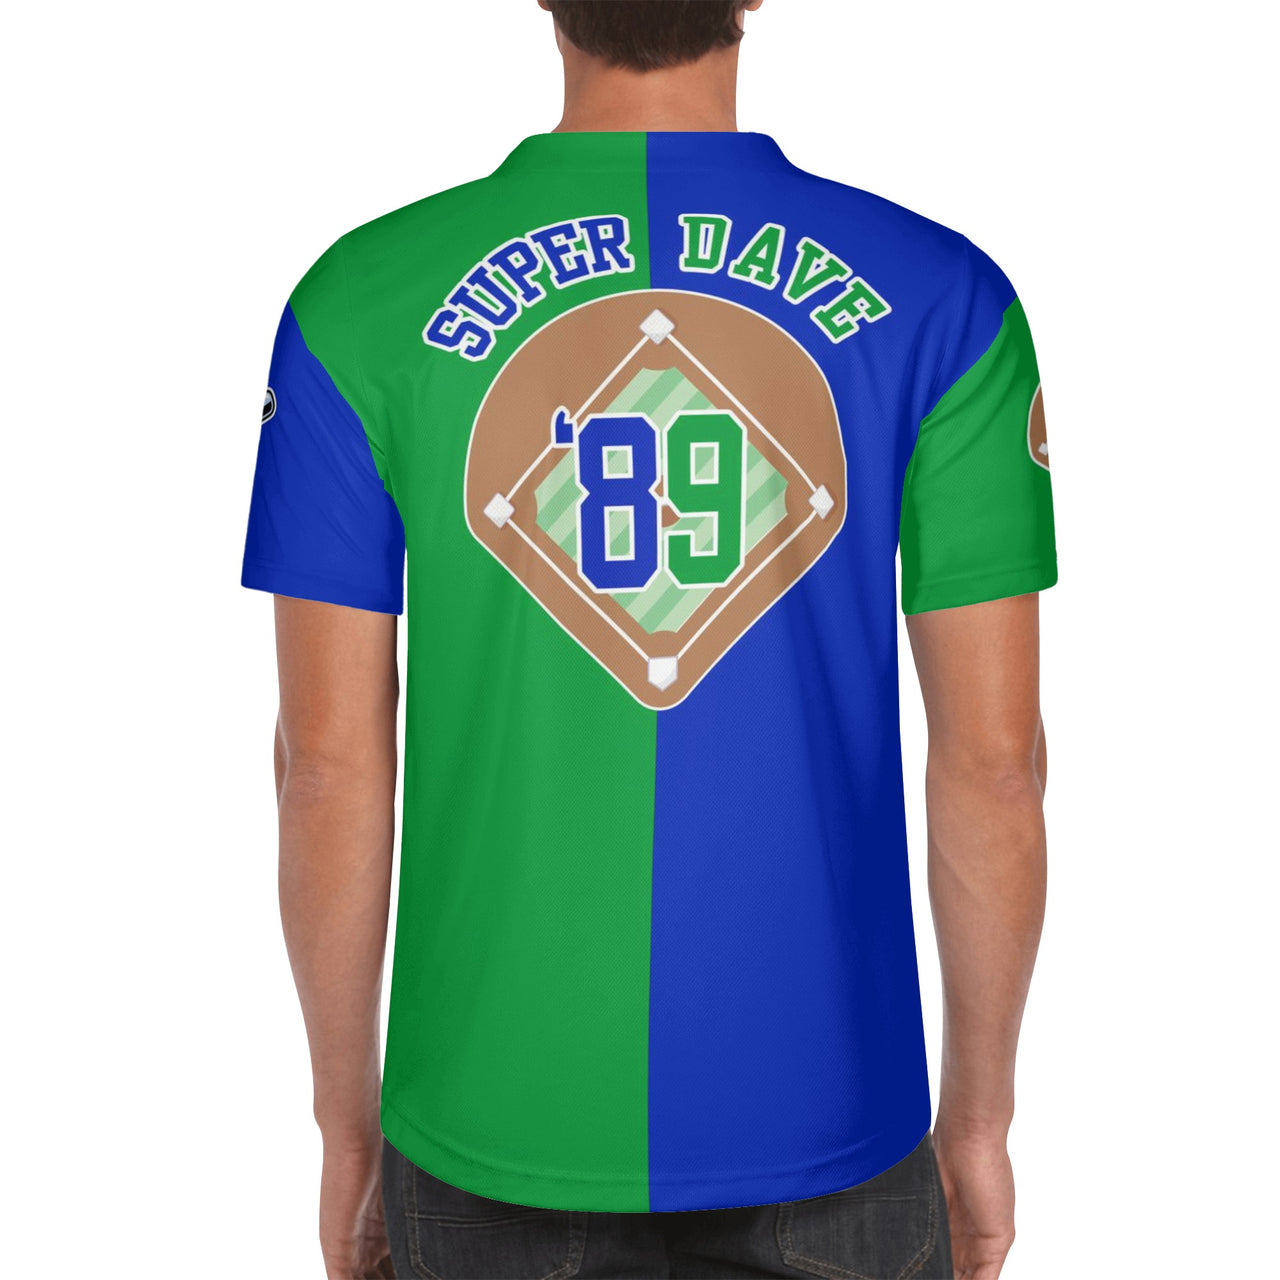 South Shore 89 v1 Short Sleeve Baseball Jersey